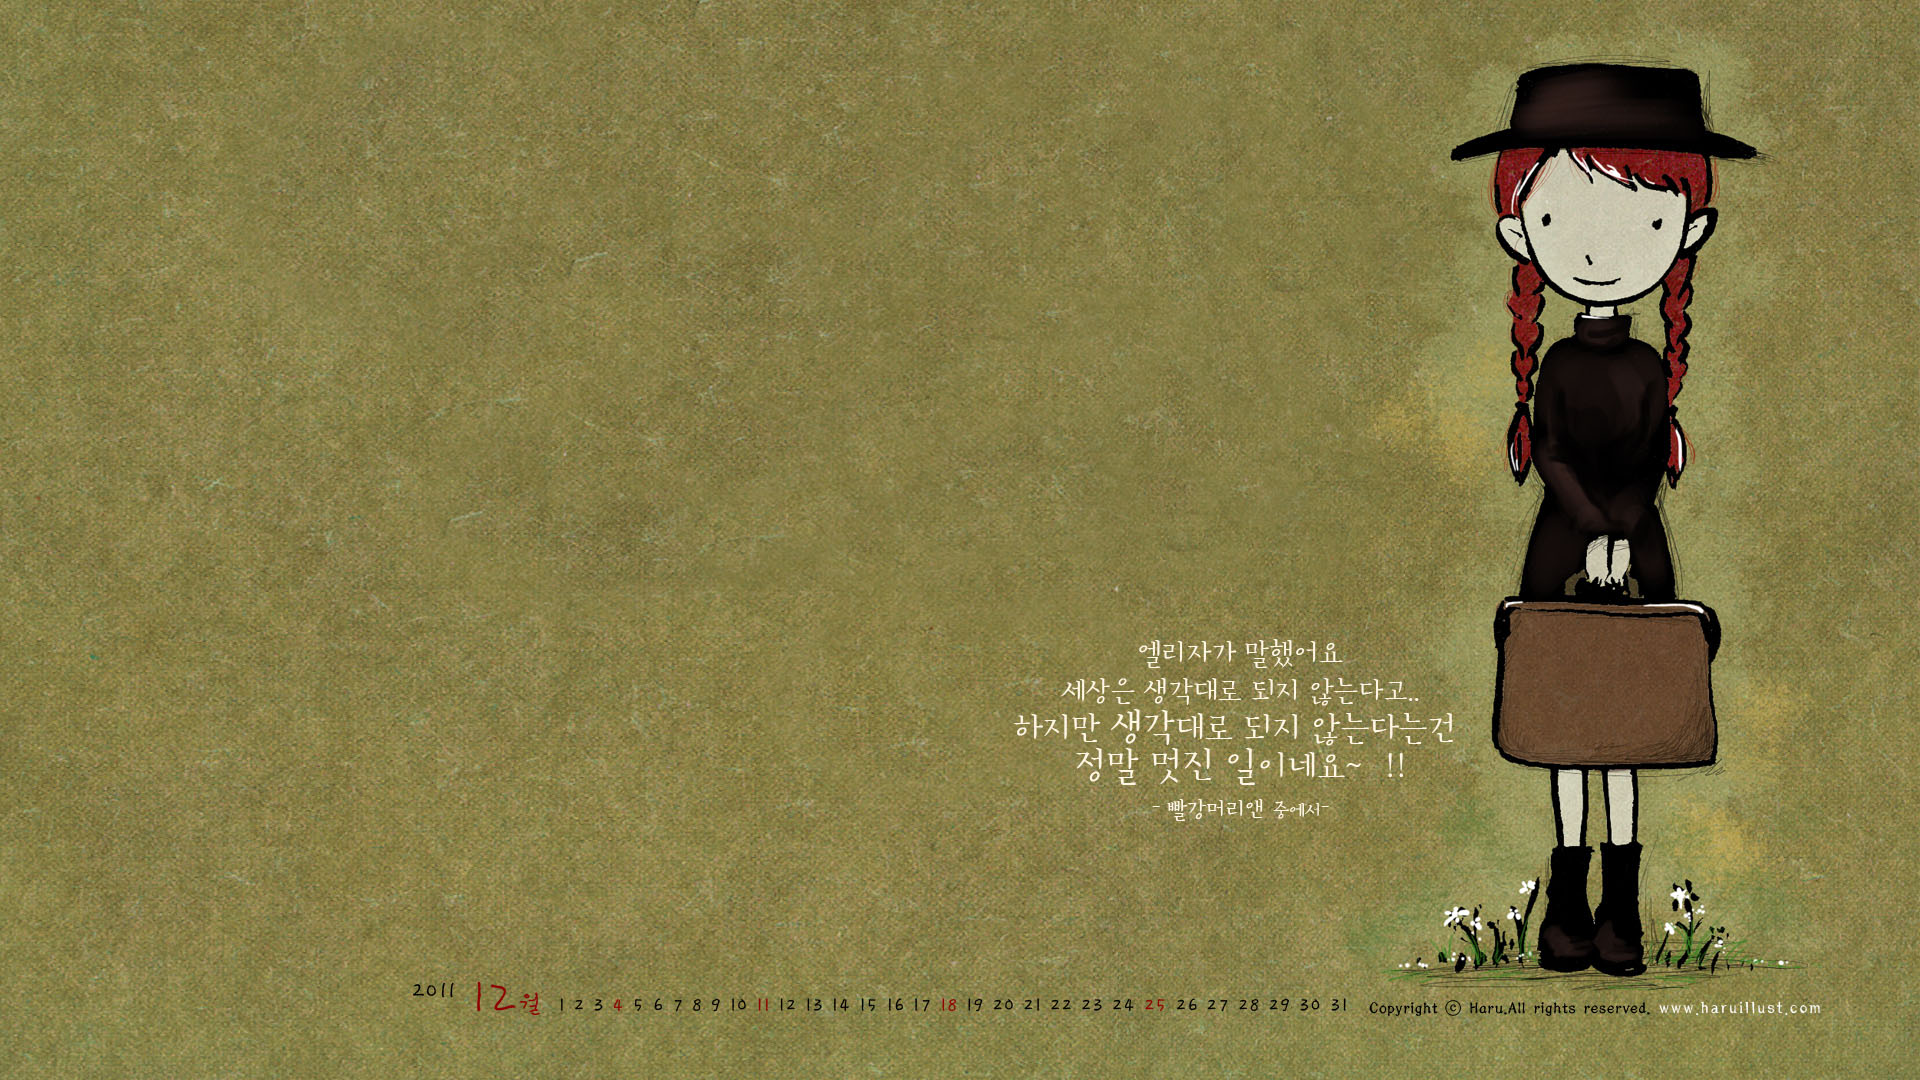 Cute Korean cartoon 2011 December calendar wallpaper